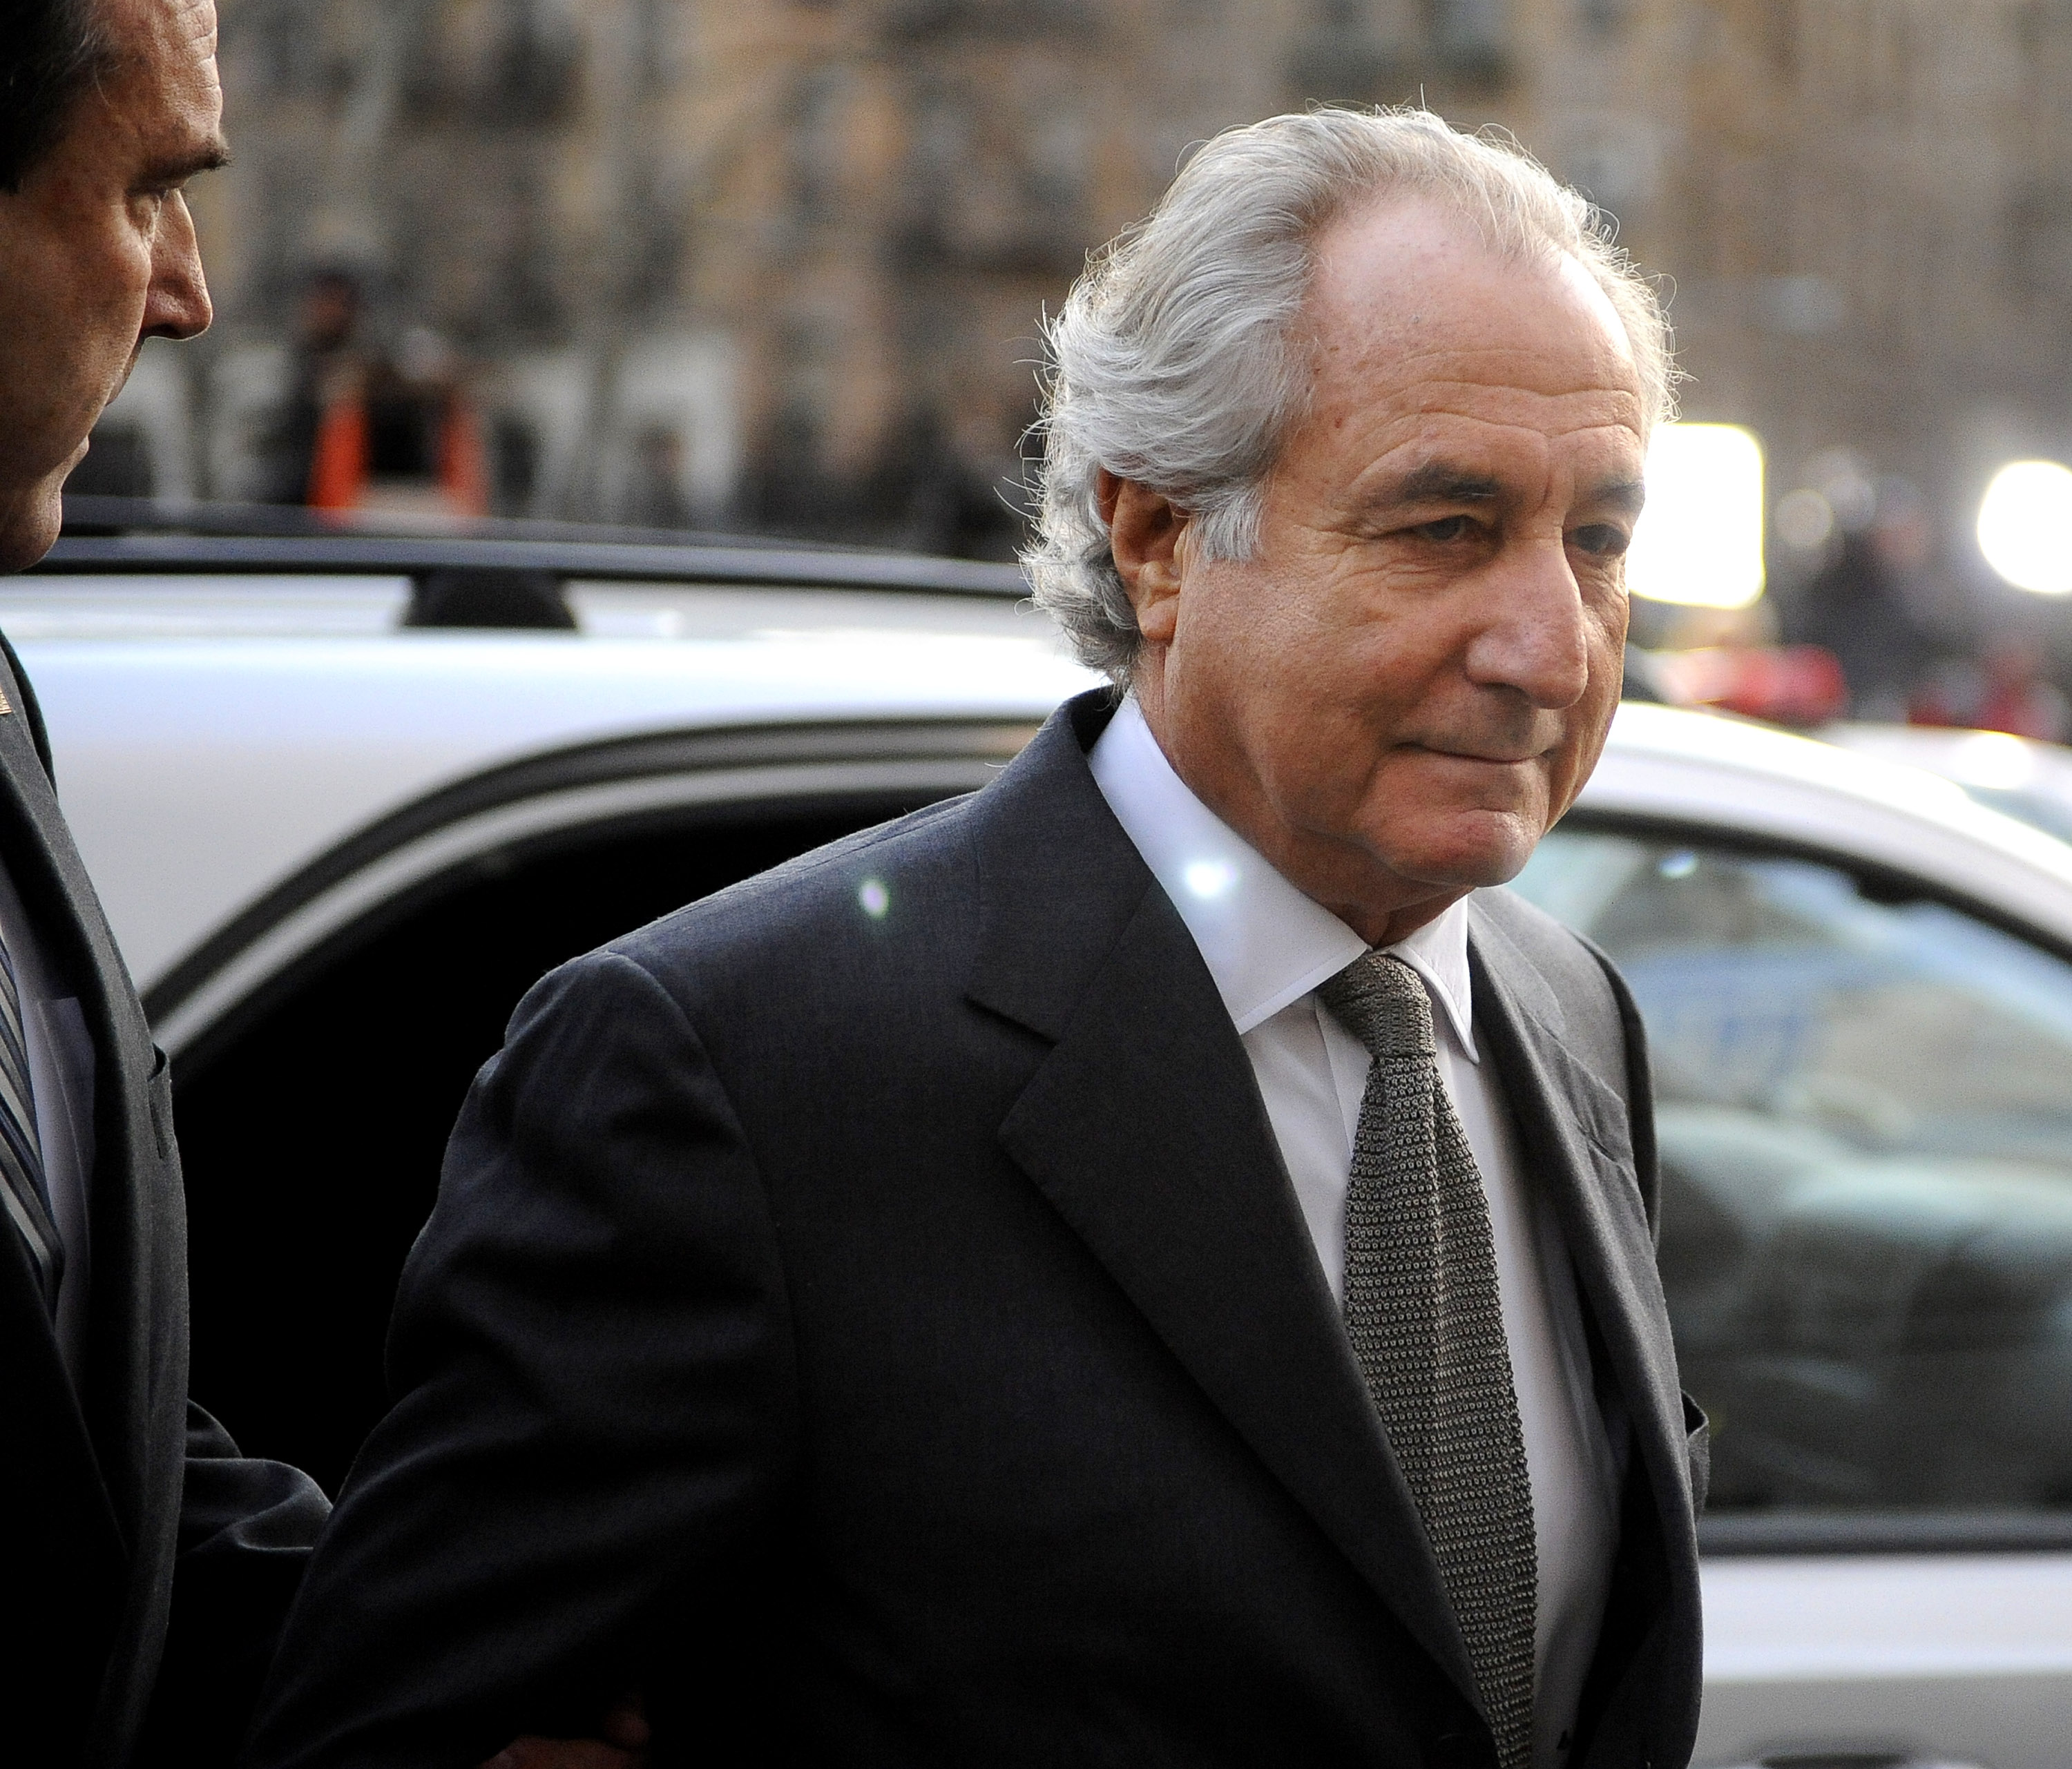 Bernard Madoff  (Photo by Stephen Chernin/Getty Images)